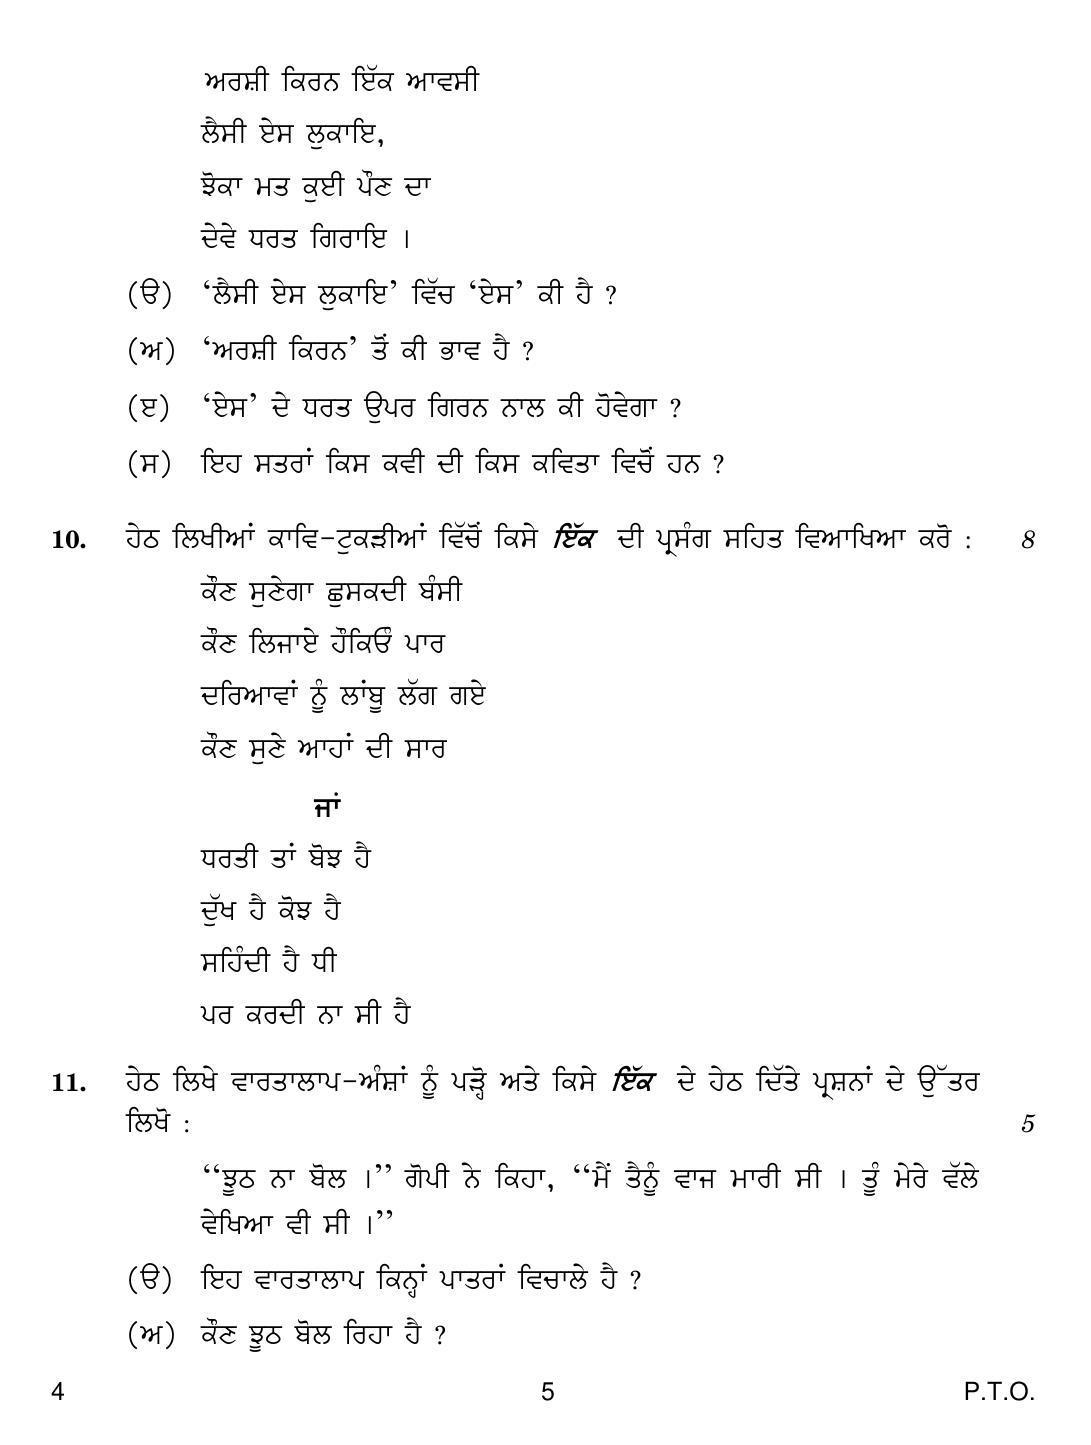 CBSE Class 12 4 Punjabi 2019 Compartment Question Paper - Page 5